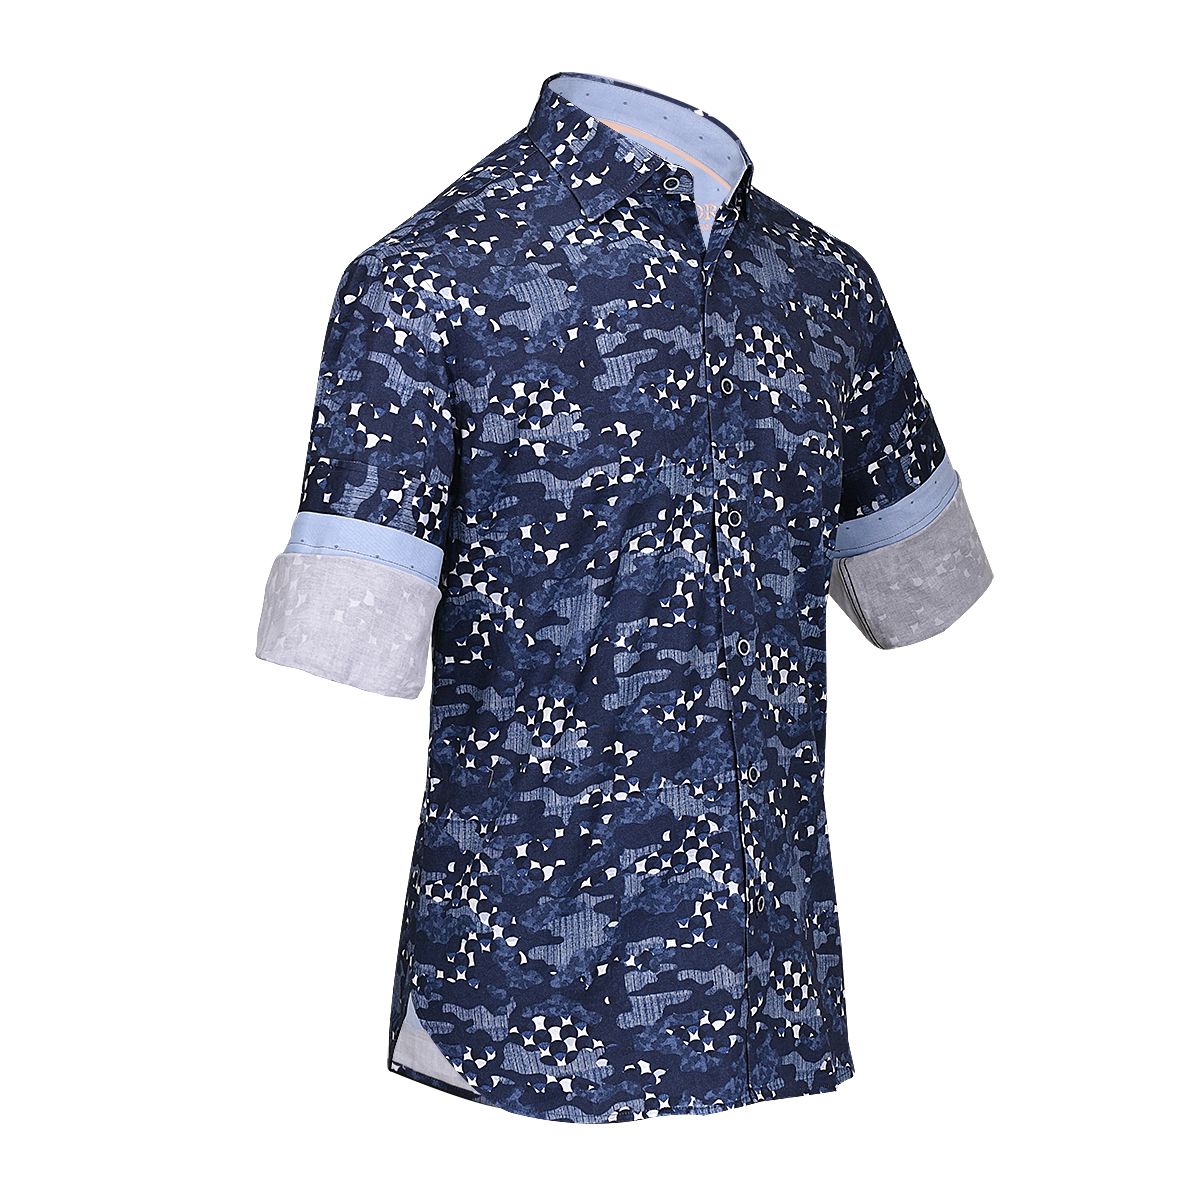 CM04642 - Cuadra blue casual fashion long sleeve cotton shirt for men.-Kuet.us